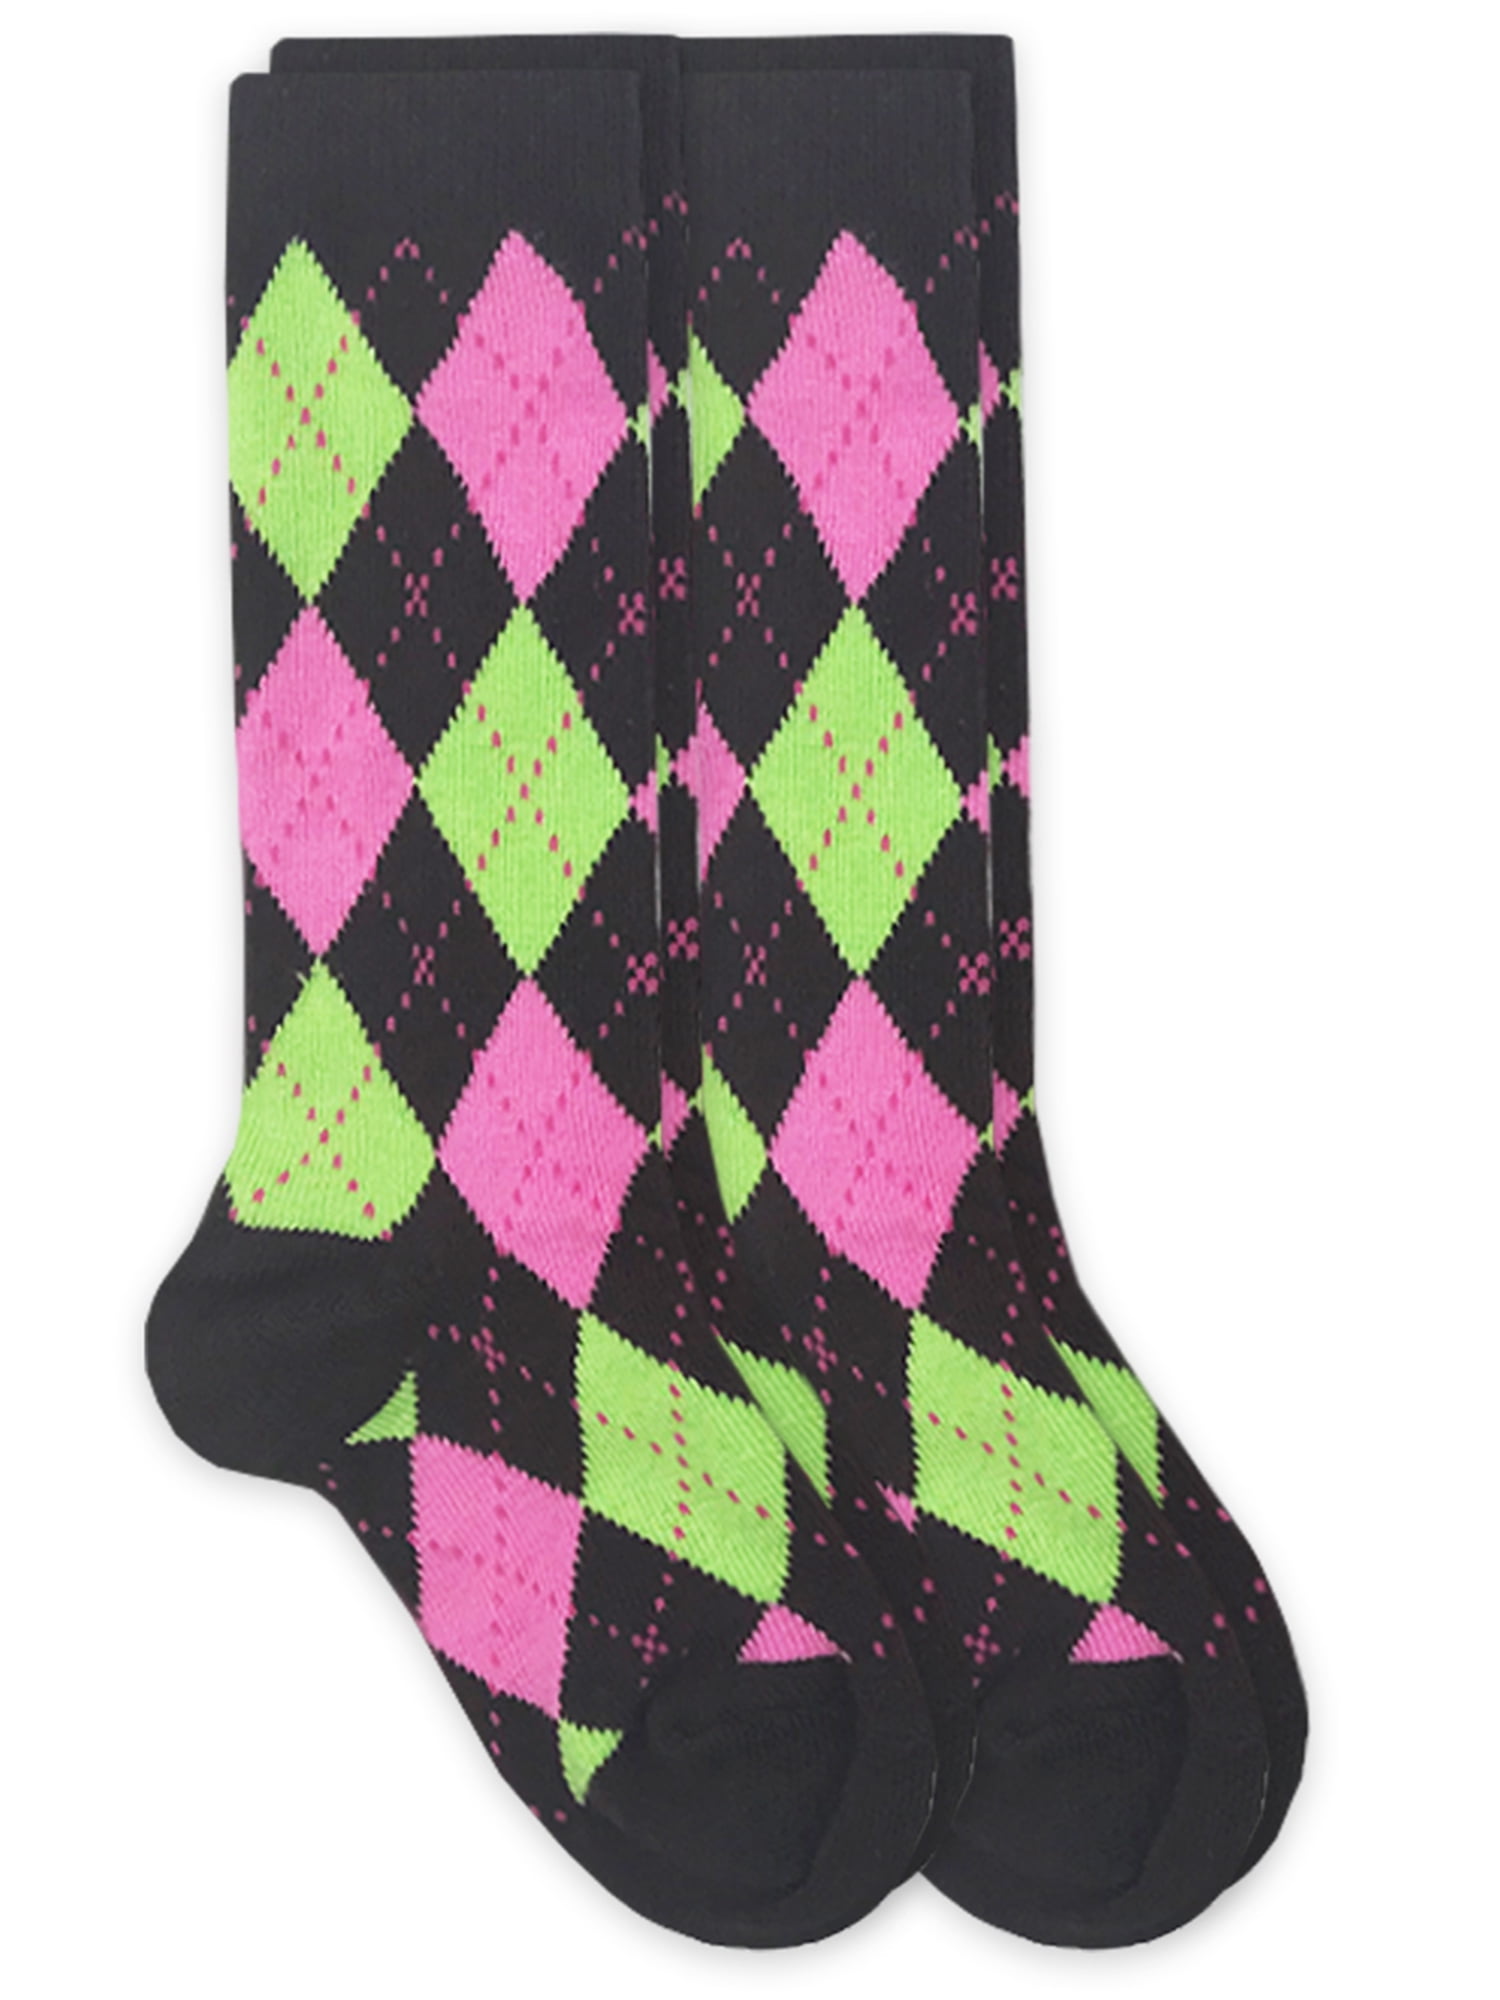 Ladies 5 Pack Socks Design Polka Dots Dog Black Pink Stripe Cotton Rich Size 4-8